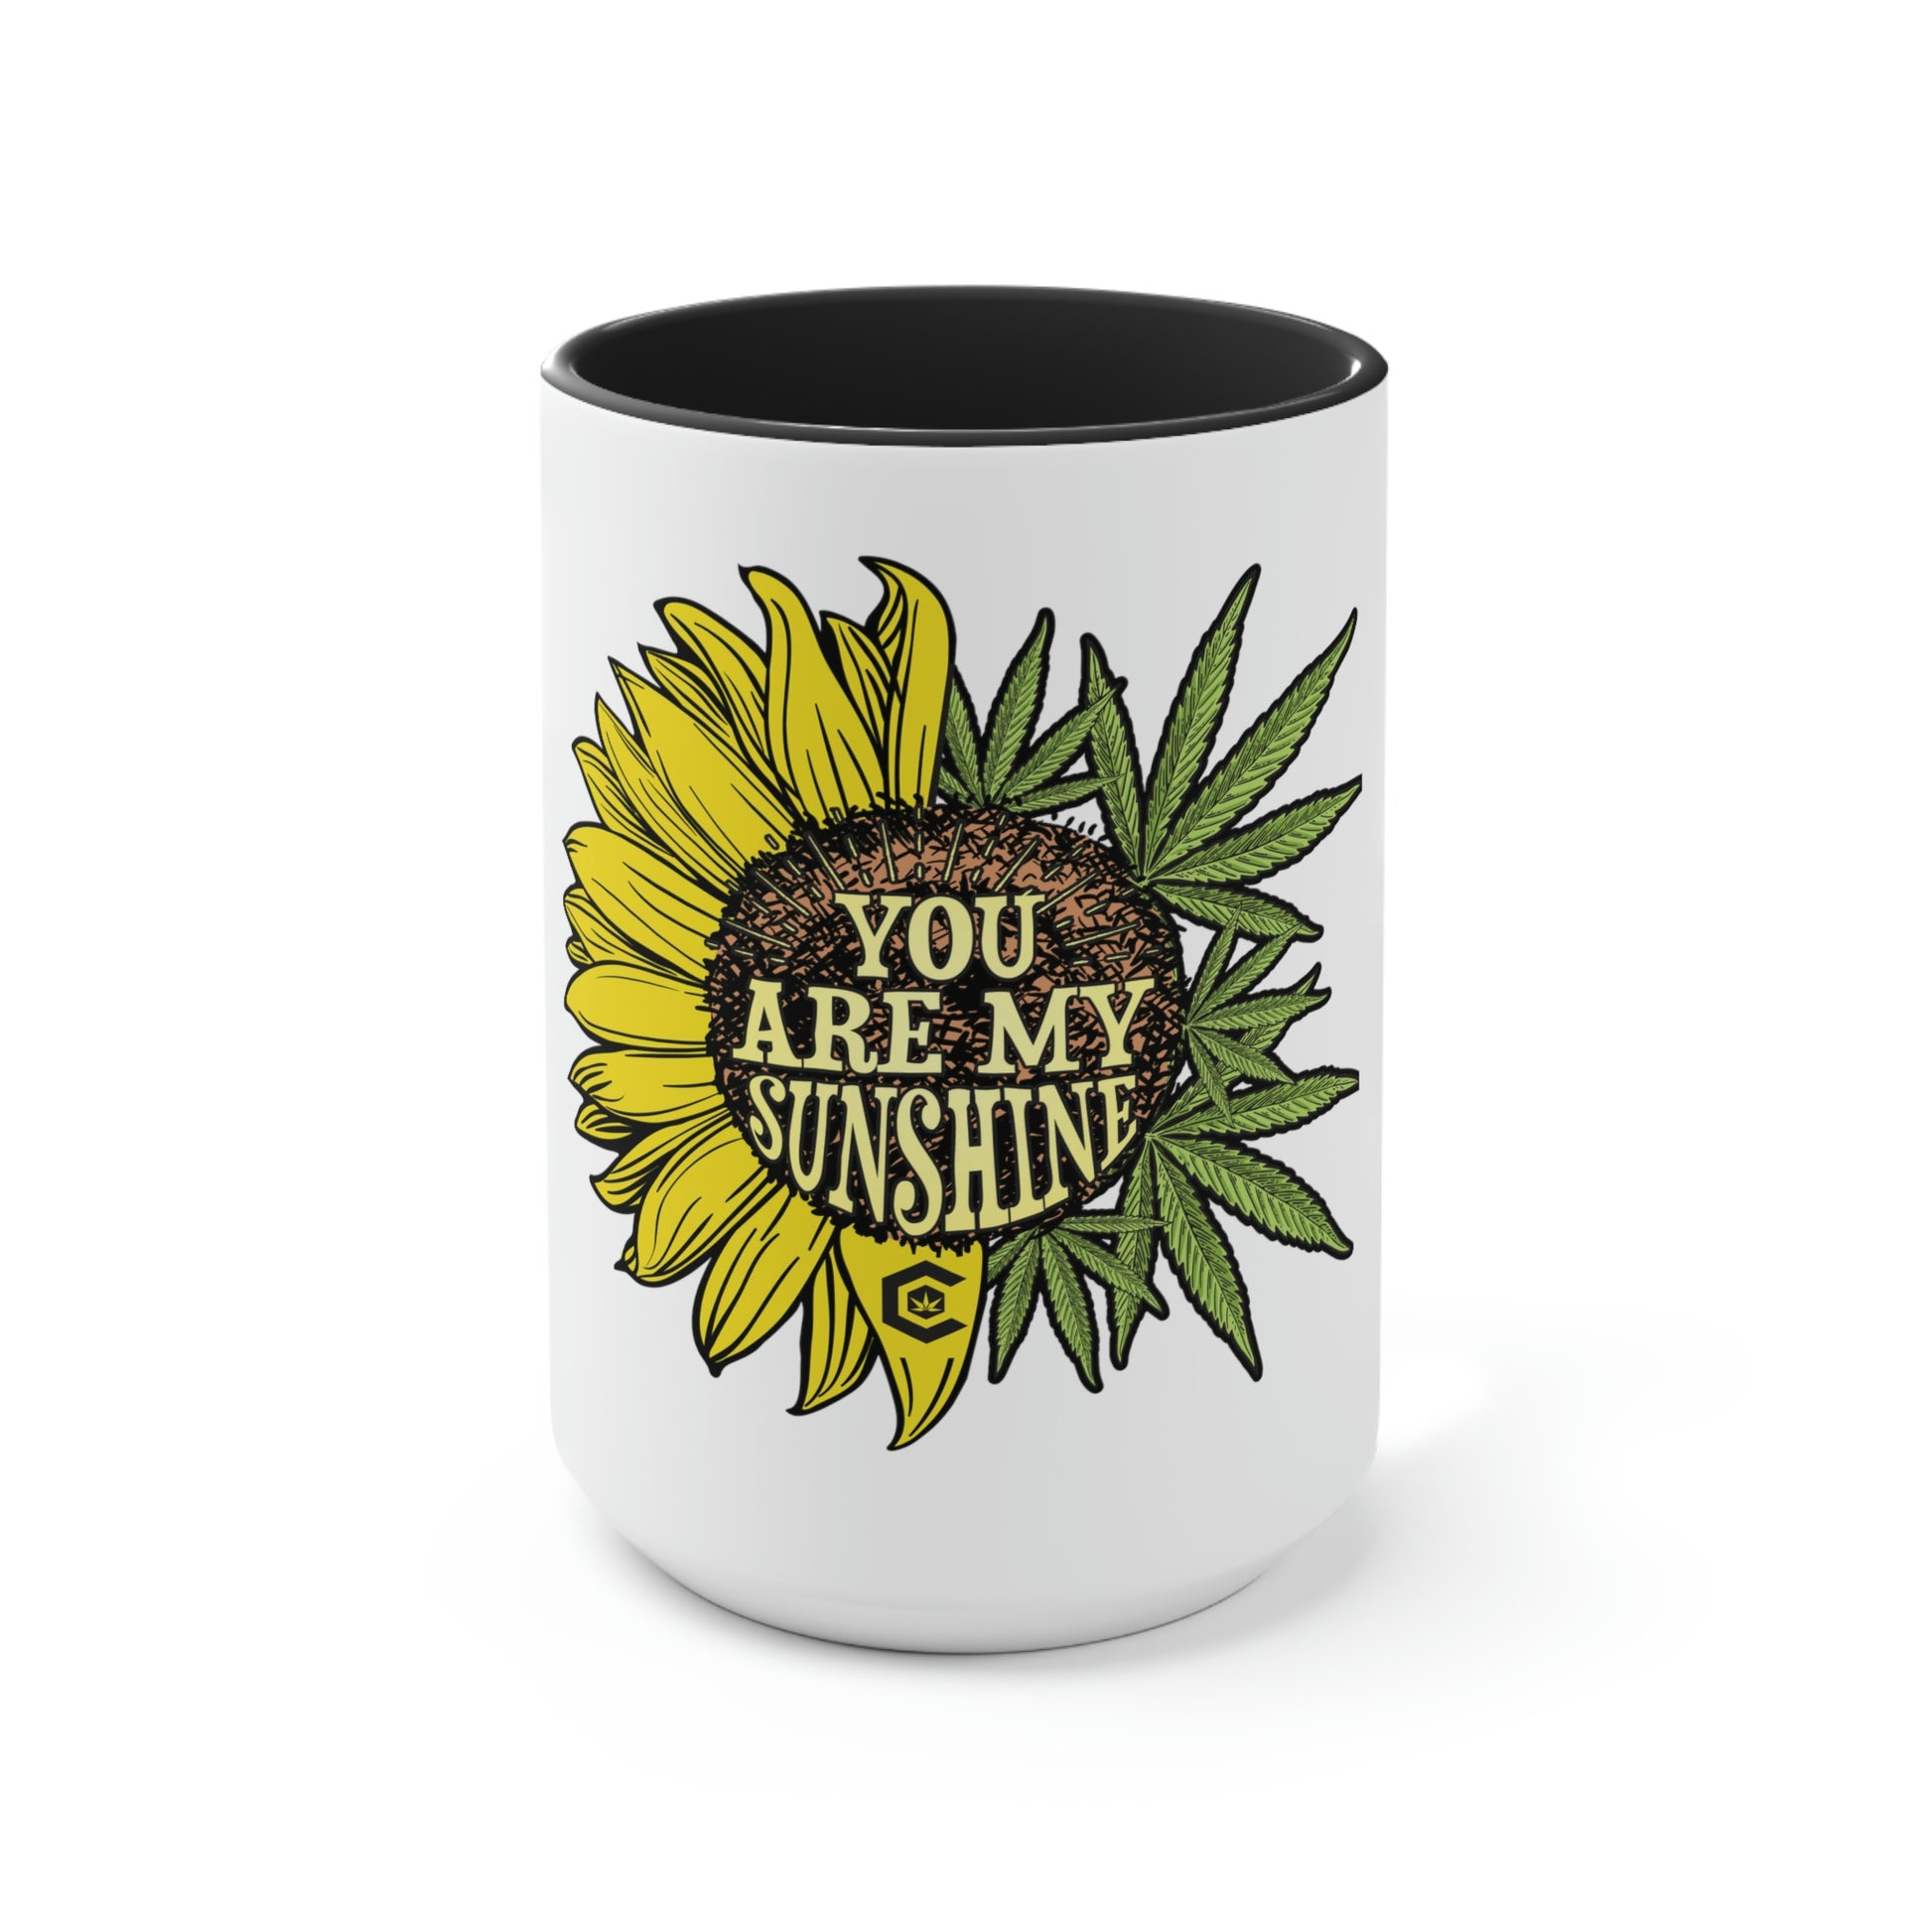 You Are My Sunshine Coffee Mug is my product name.